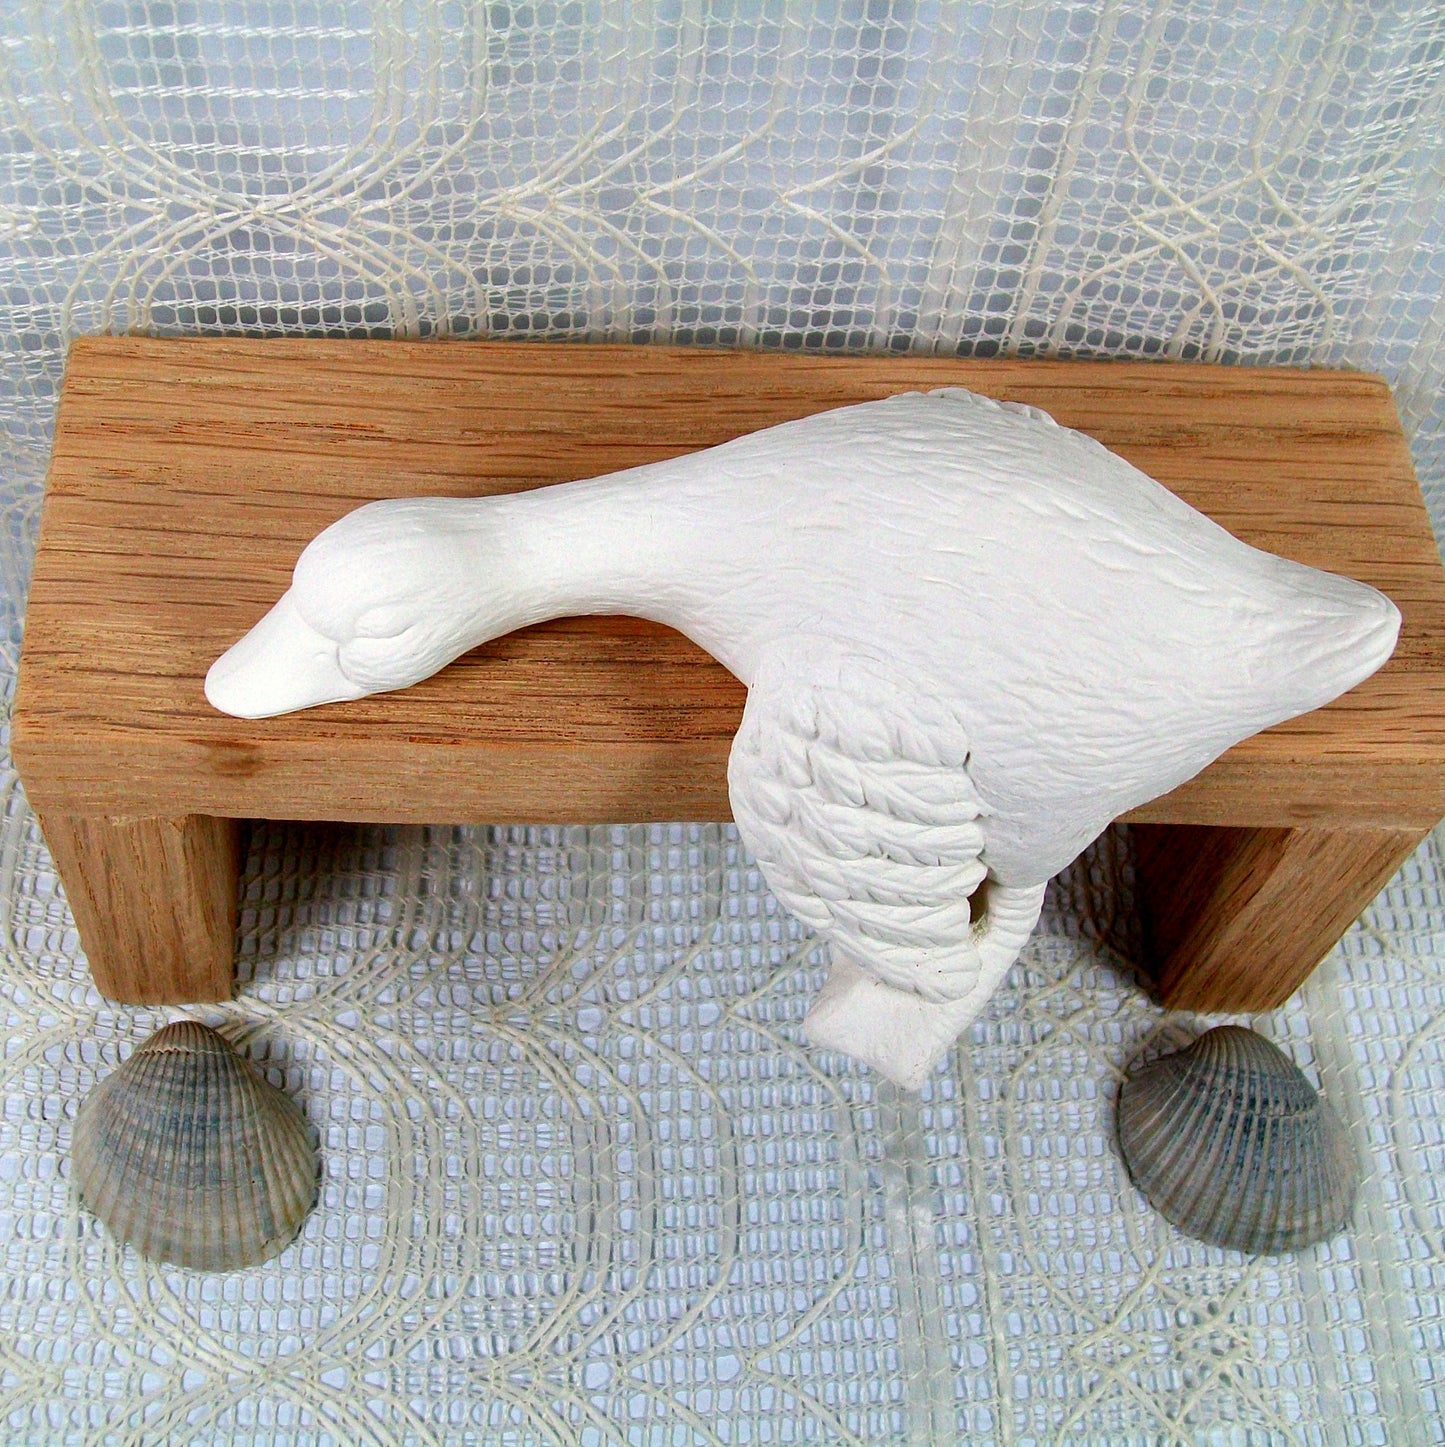 Unpainted Ceramic Duck Figurine / Shelf Duck /Handmade Ceramic Duck Statue / Ceramics to Paint / Ready to Paint / DIY Ceramics / Paintable